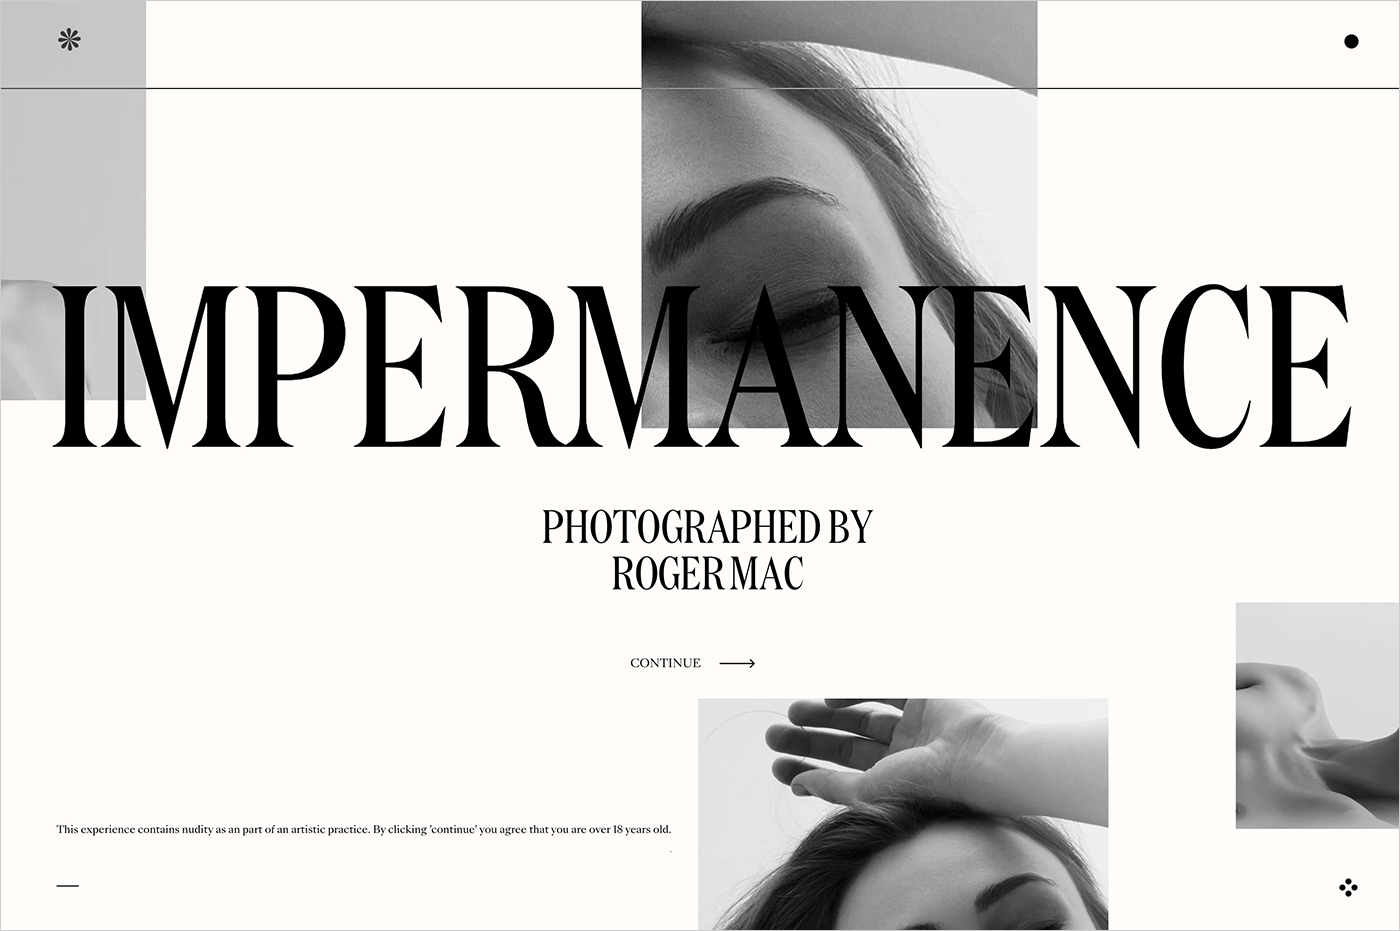 Impermanence — Photographed by Roger Macウェブサイトの画面キャプチャ画像